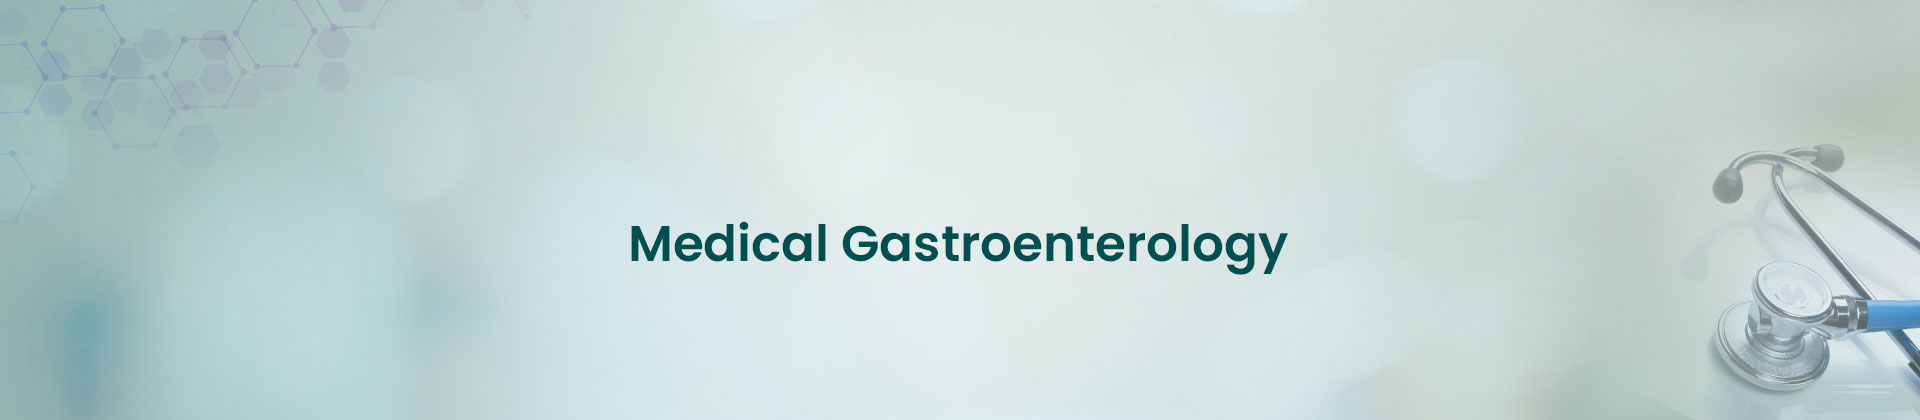 Medical Gastroenterology